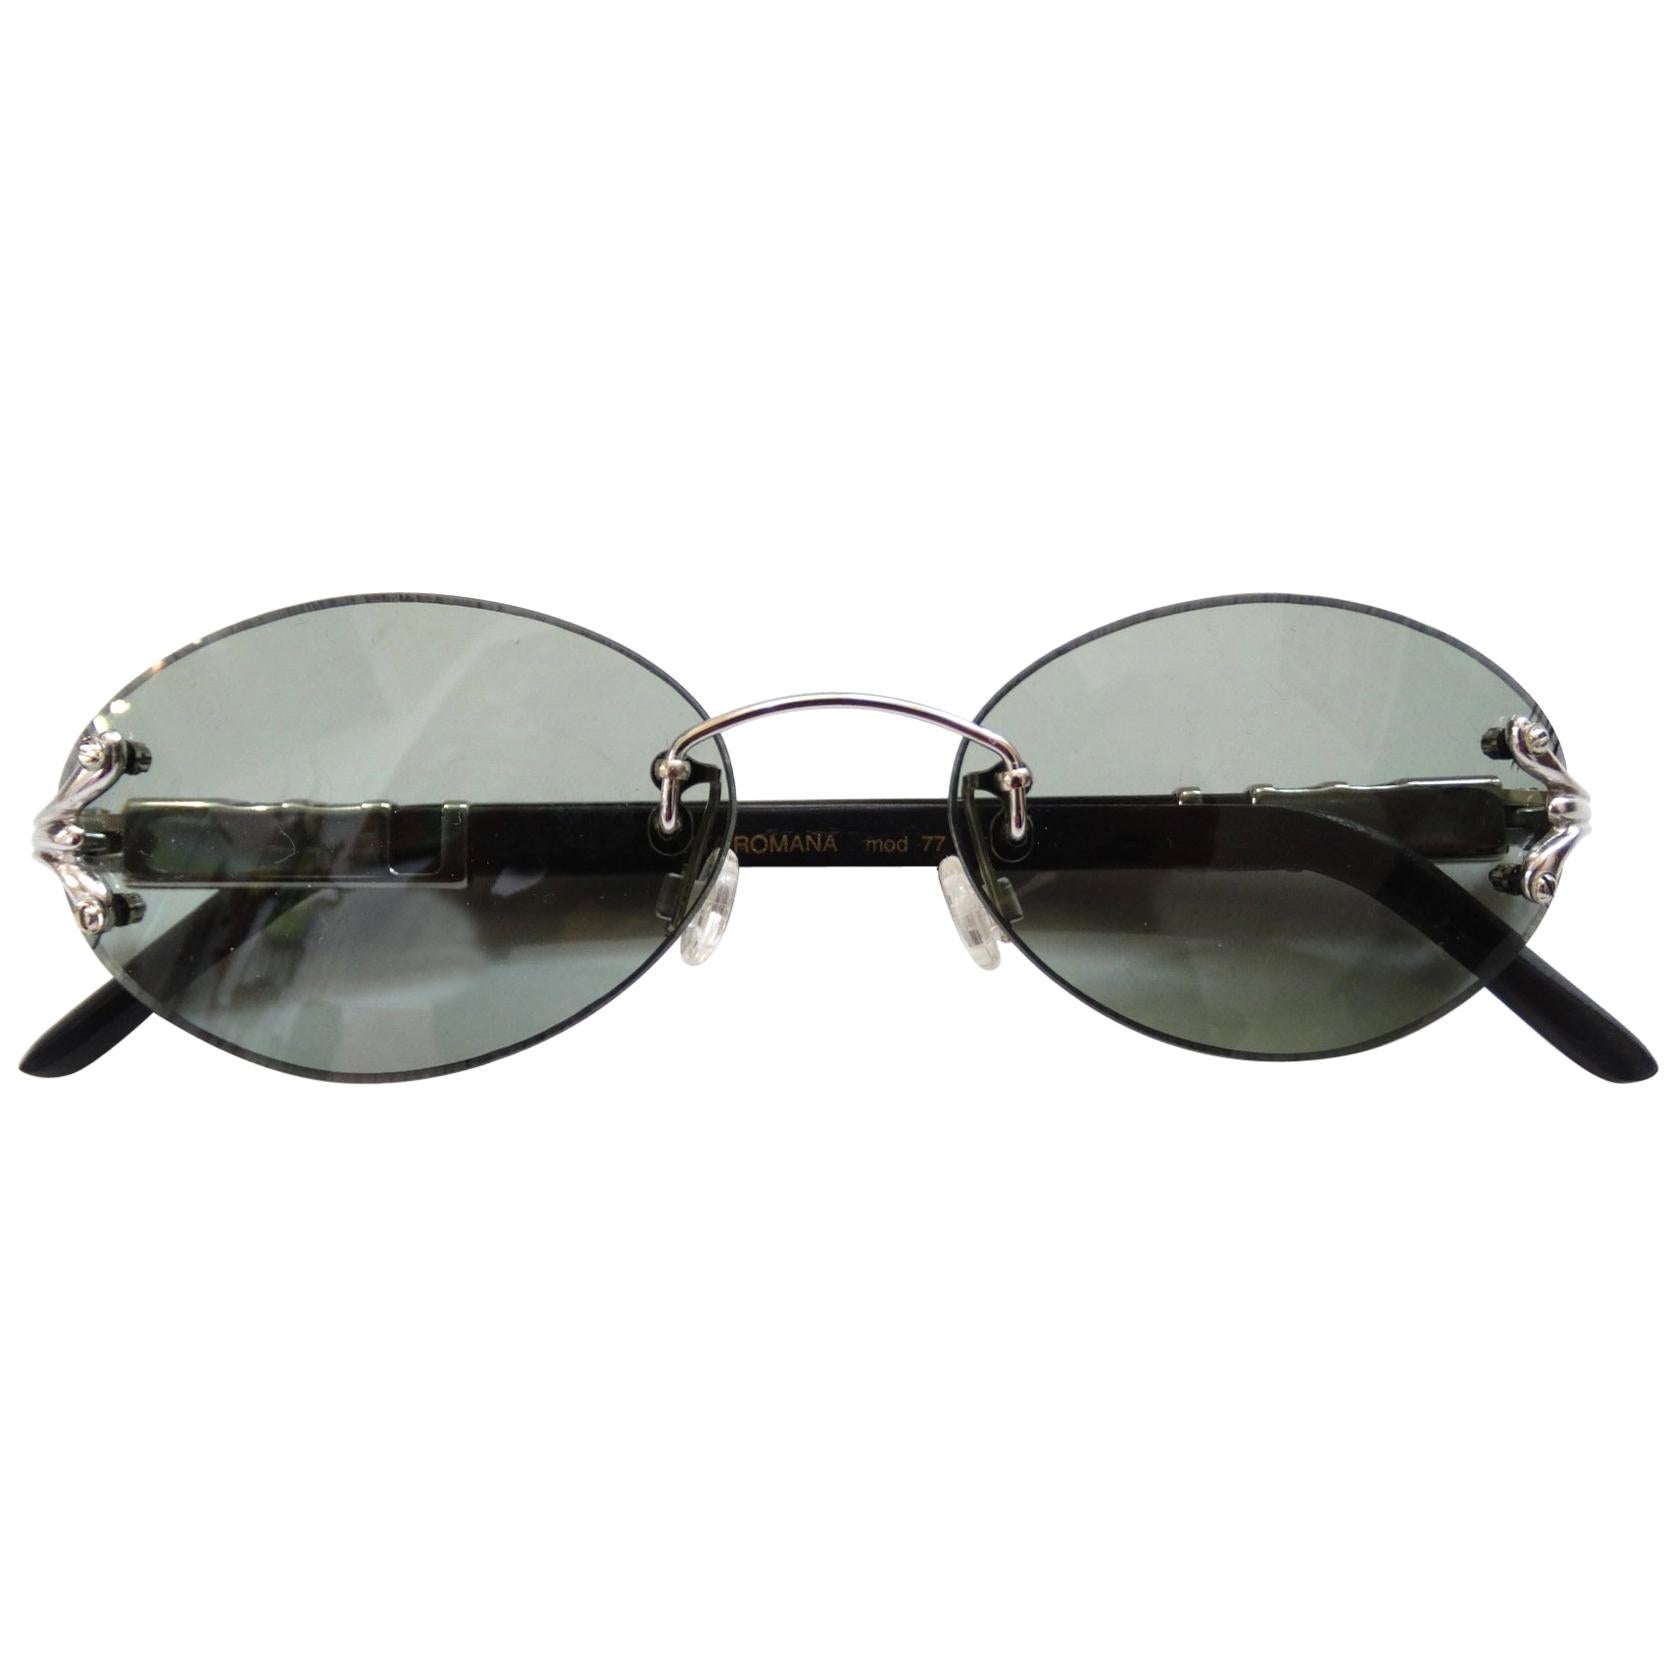 Porta Romana 1990s Skinny Black Wood Stain Sunglasses 